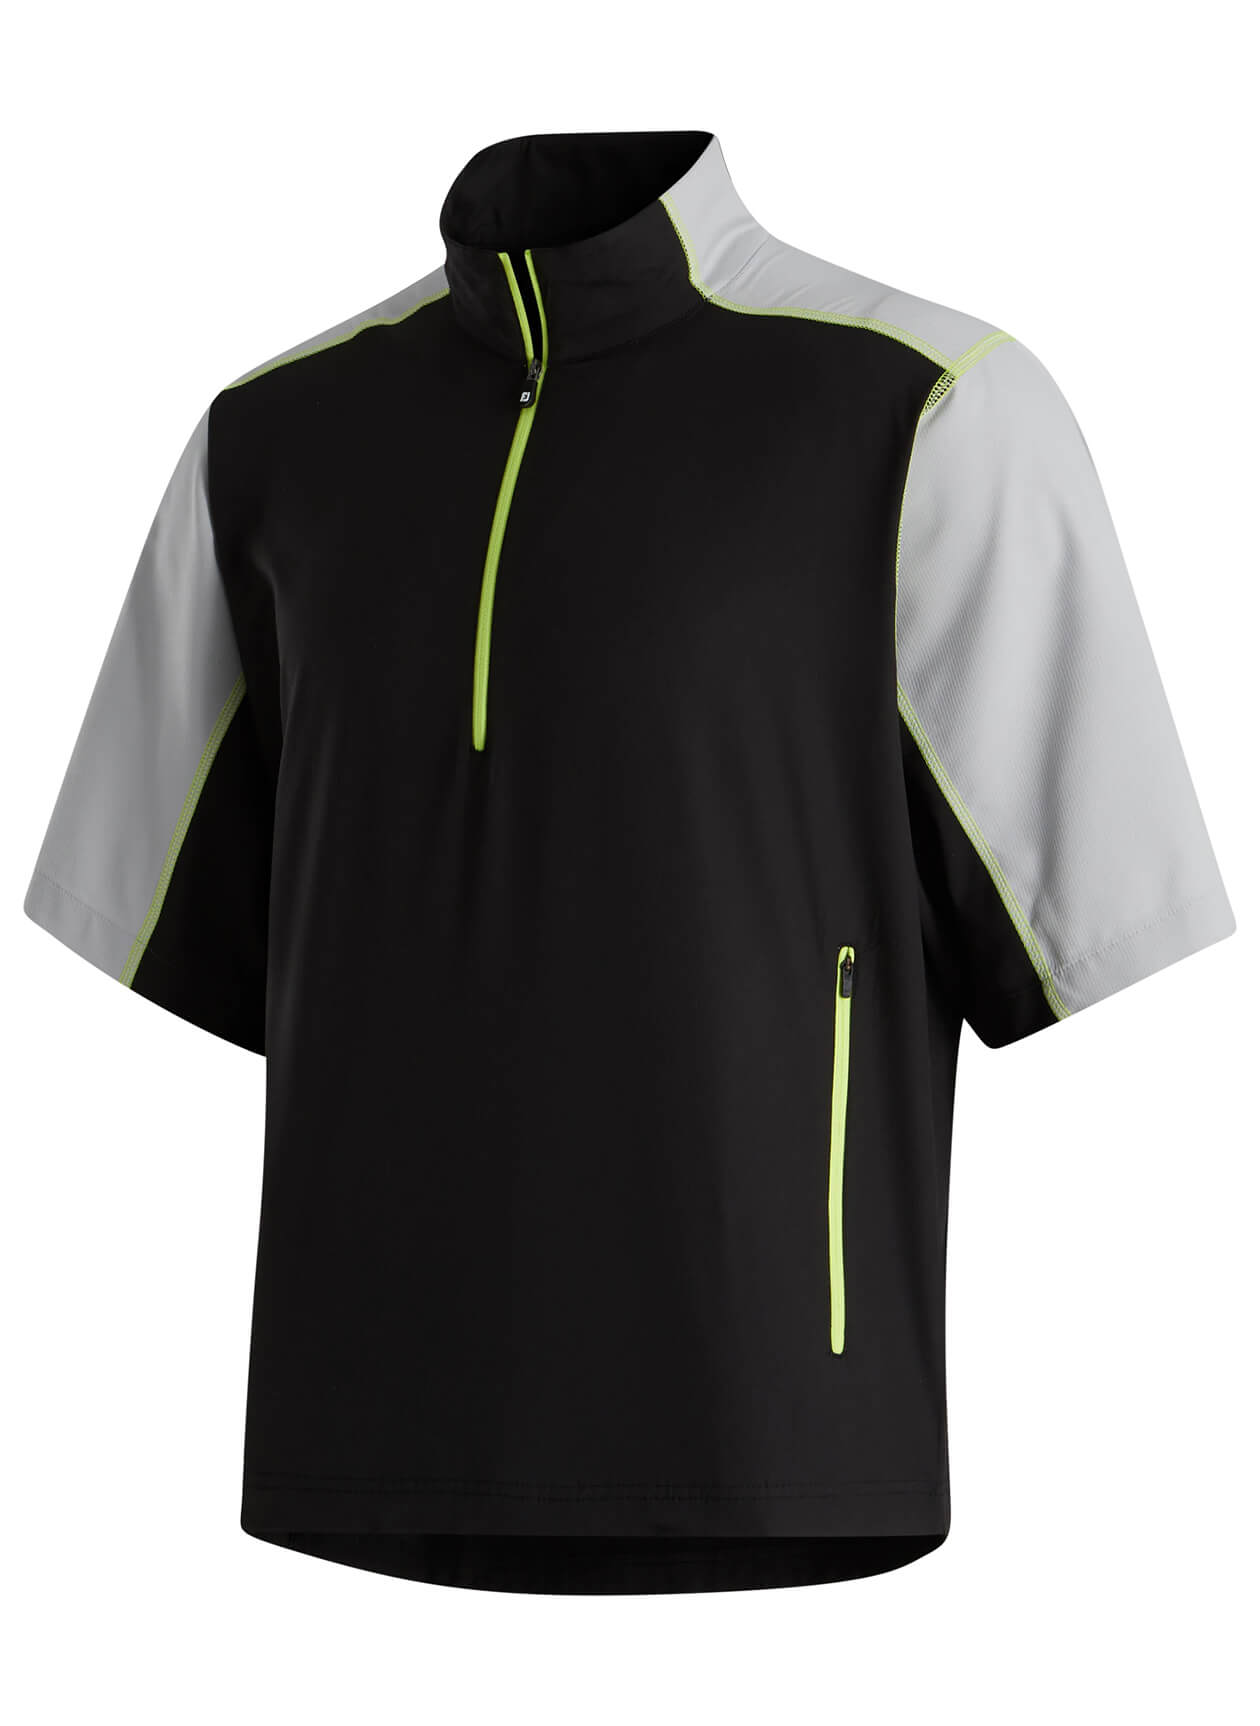 FootJoy FJ528 - Men's Sport Short-Sleeve Windshirt